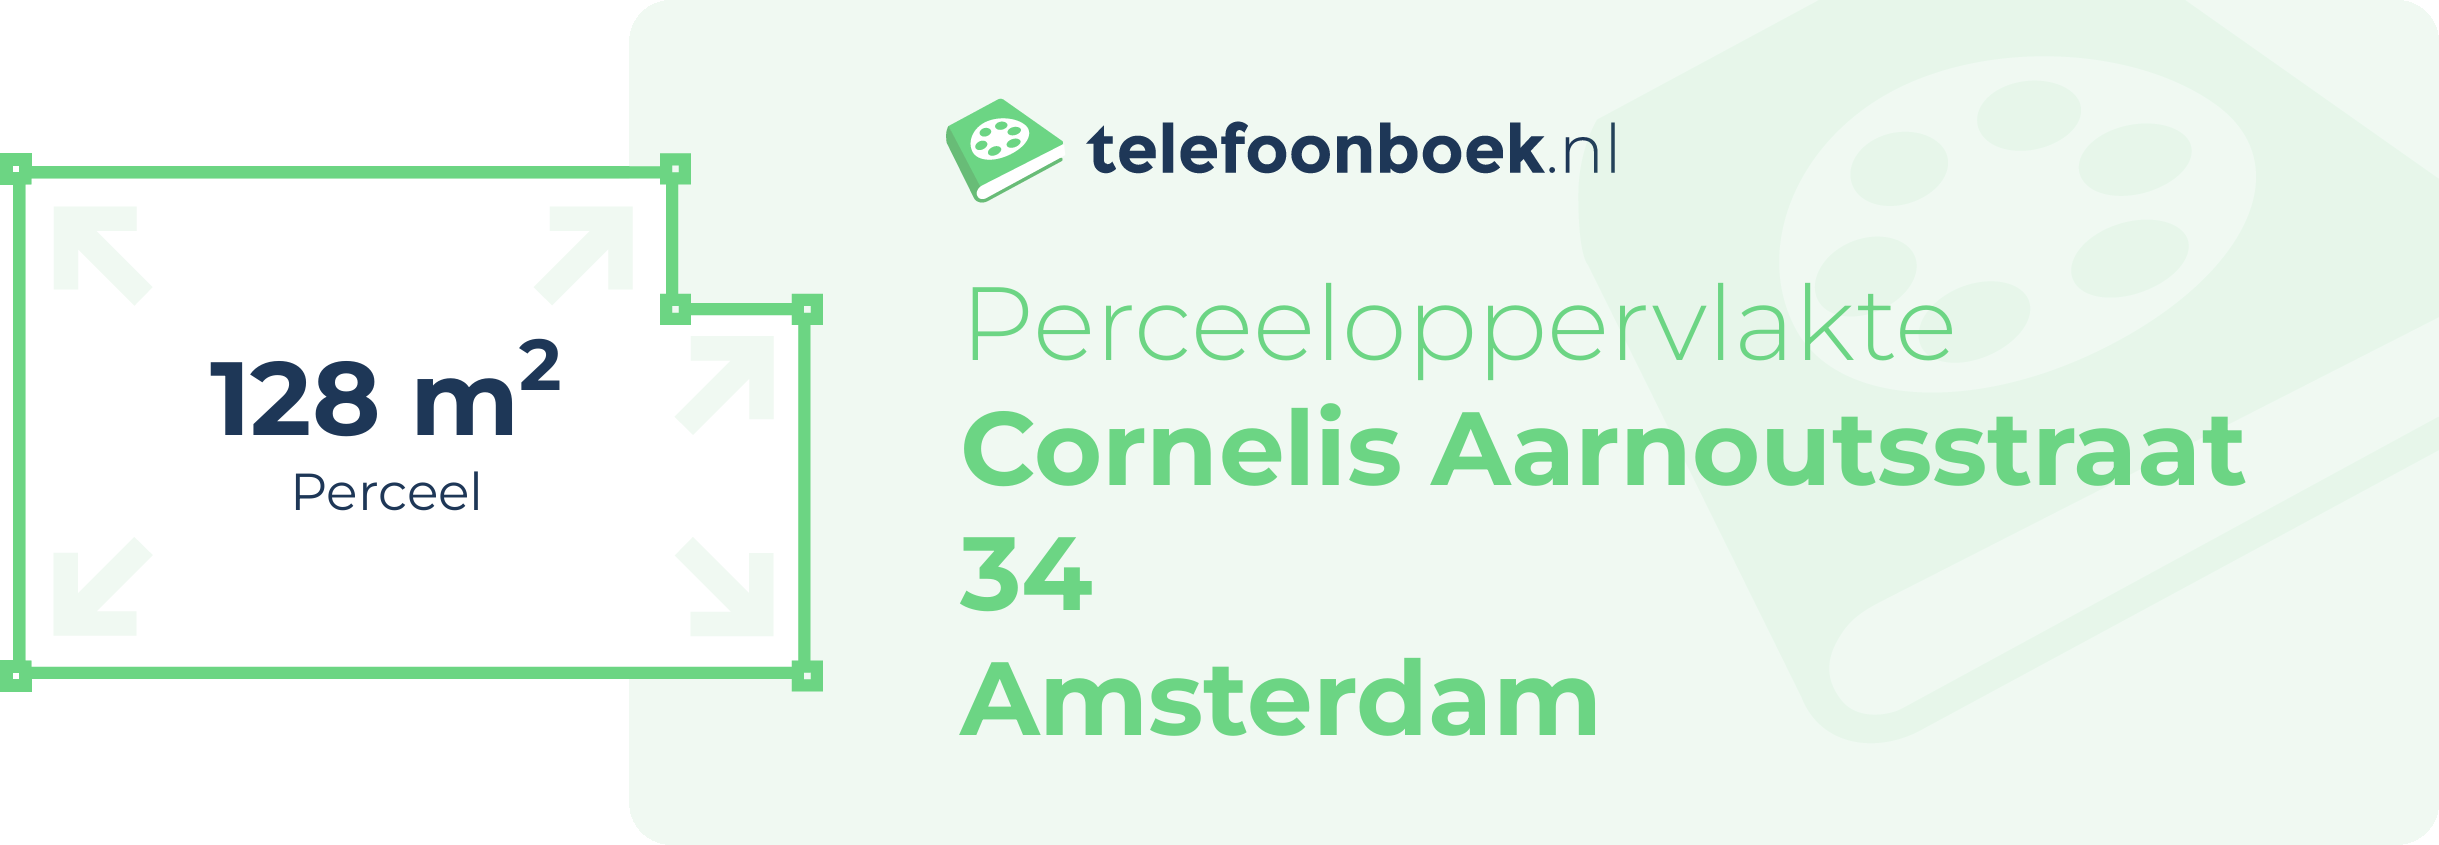 Perceeloppervlakte Cornelis Aarnoutsstraat 34 Amsterdam